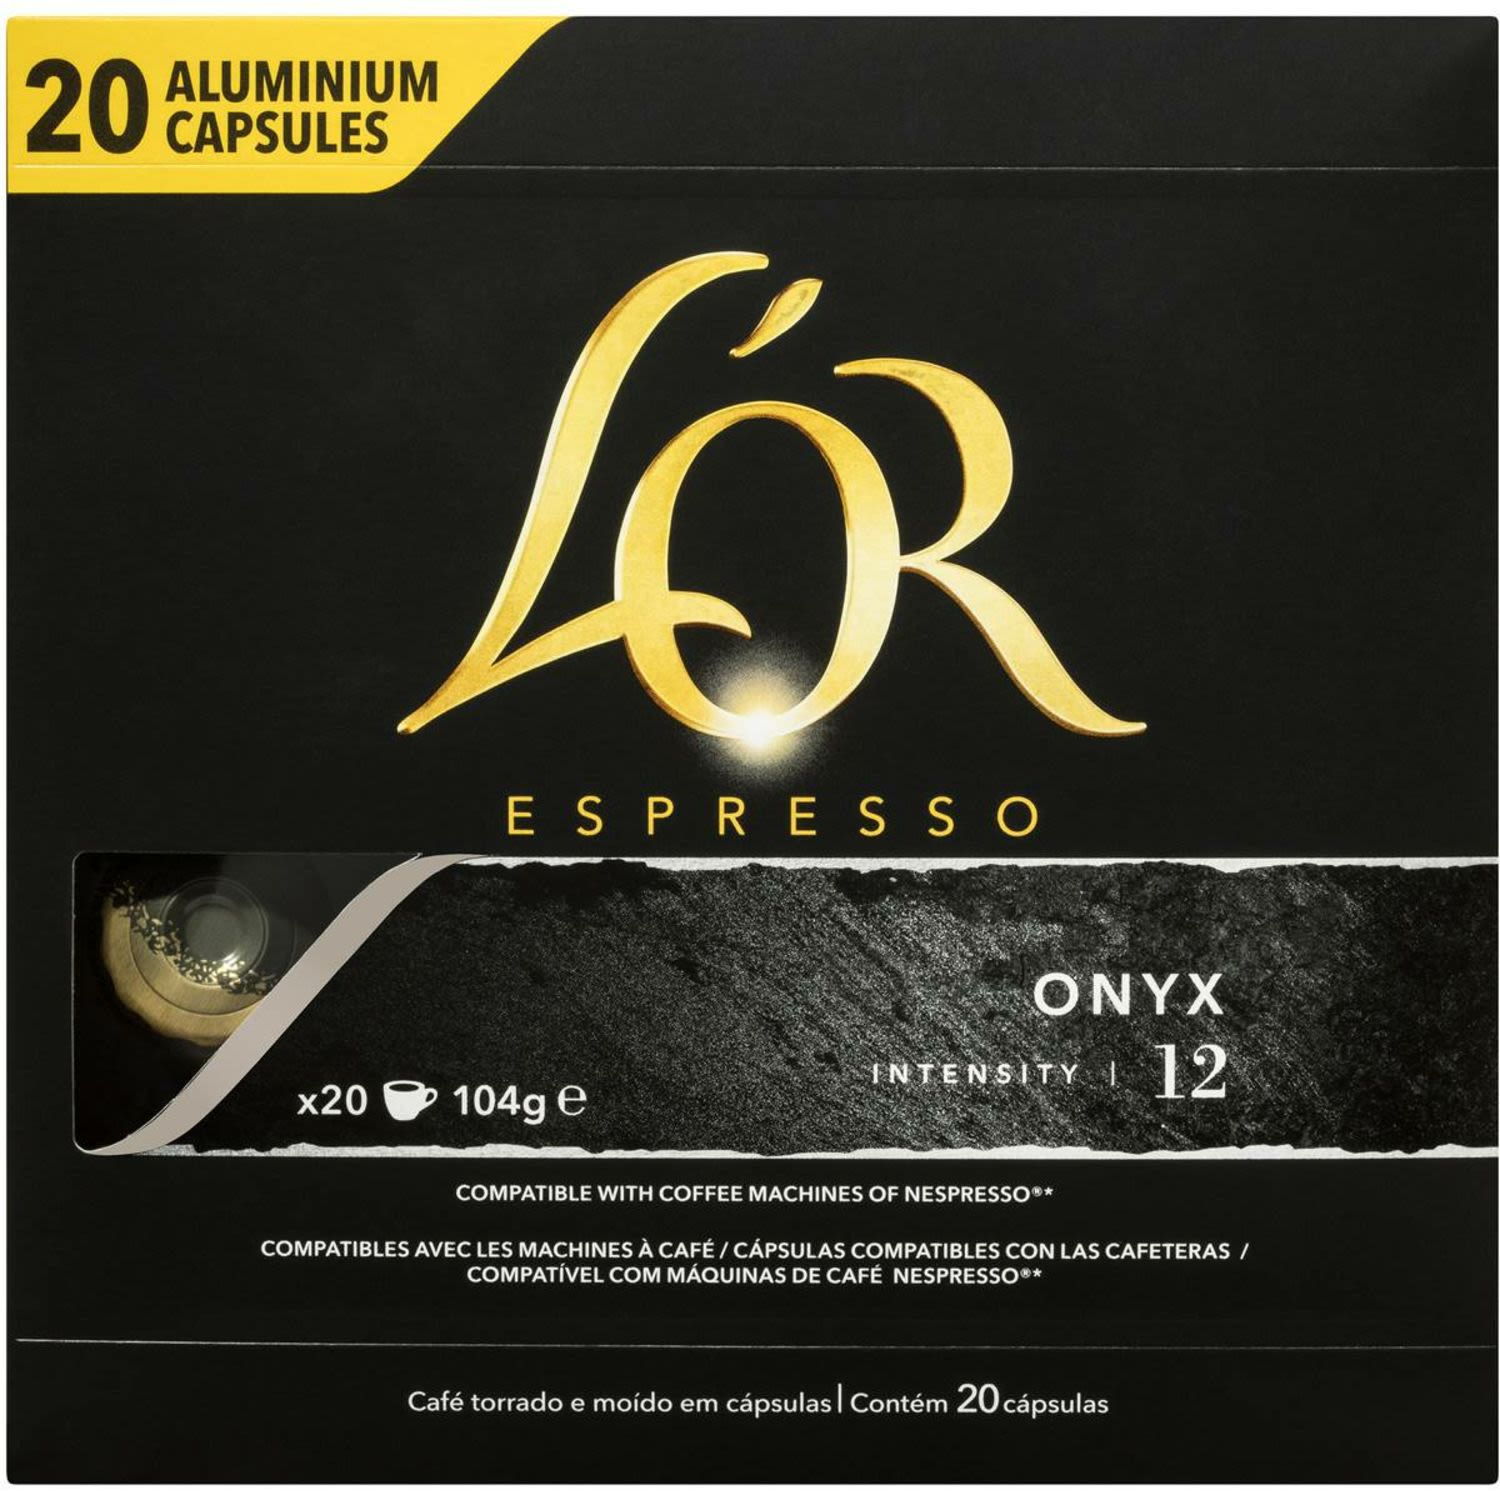 L'OR Espresso Onyx Capsules, 20 Each